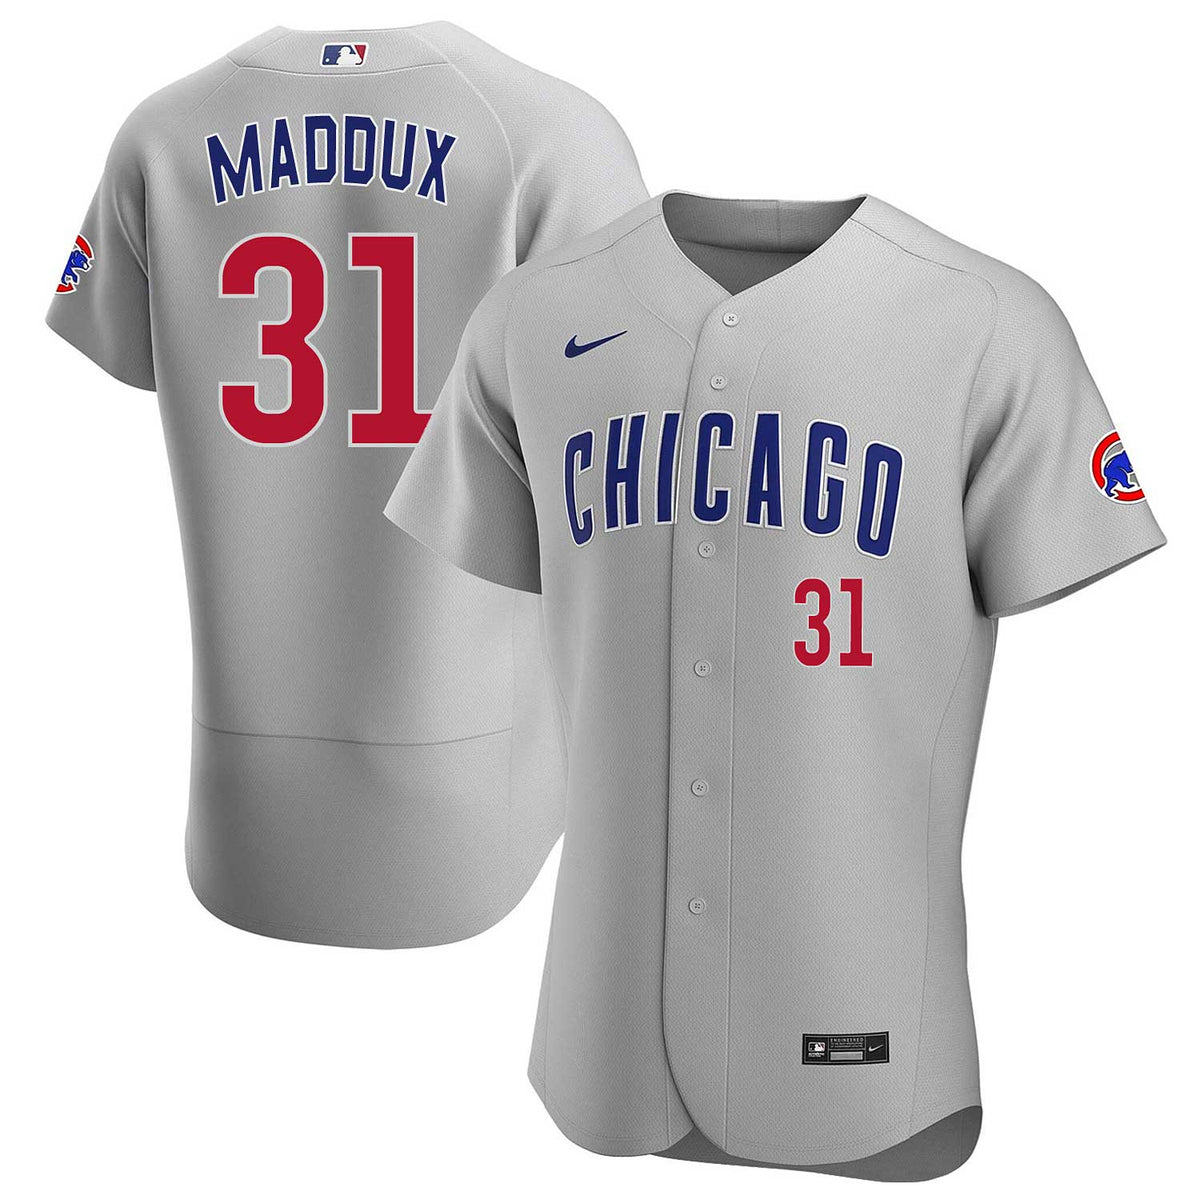 Greg Maddux Jersey  Greg Maddux Cool Base and Flex Base Jerseys - Chicago  Cubs Store